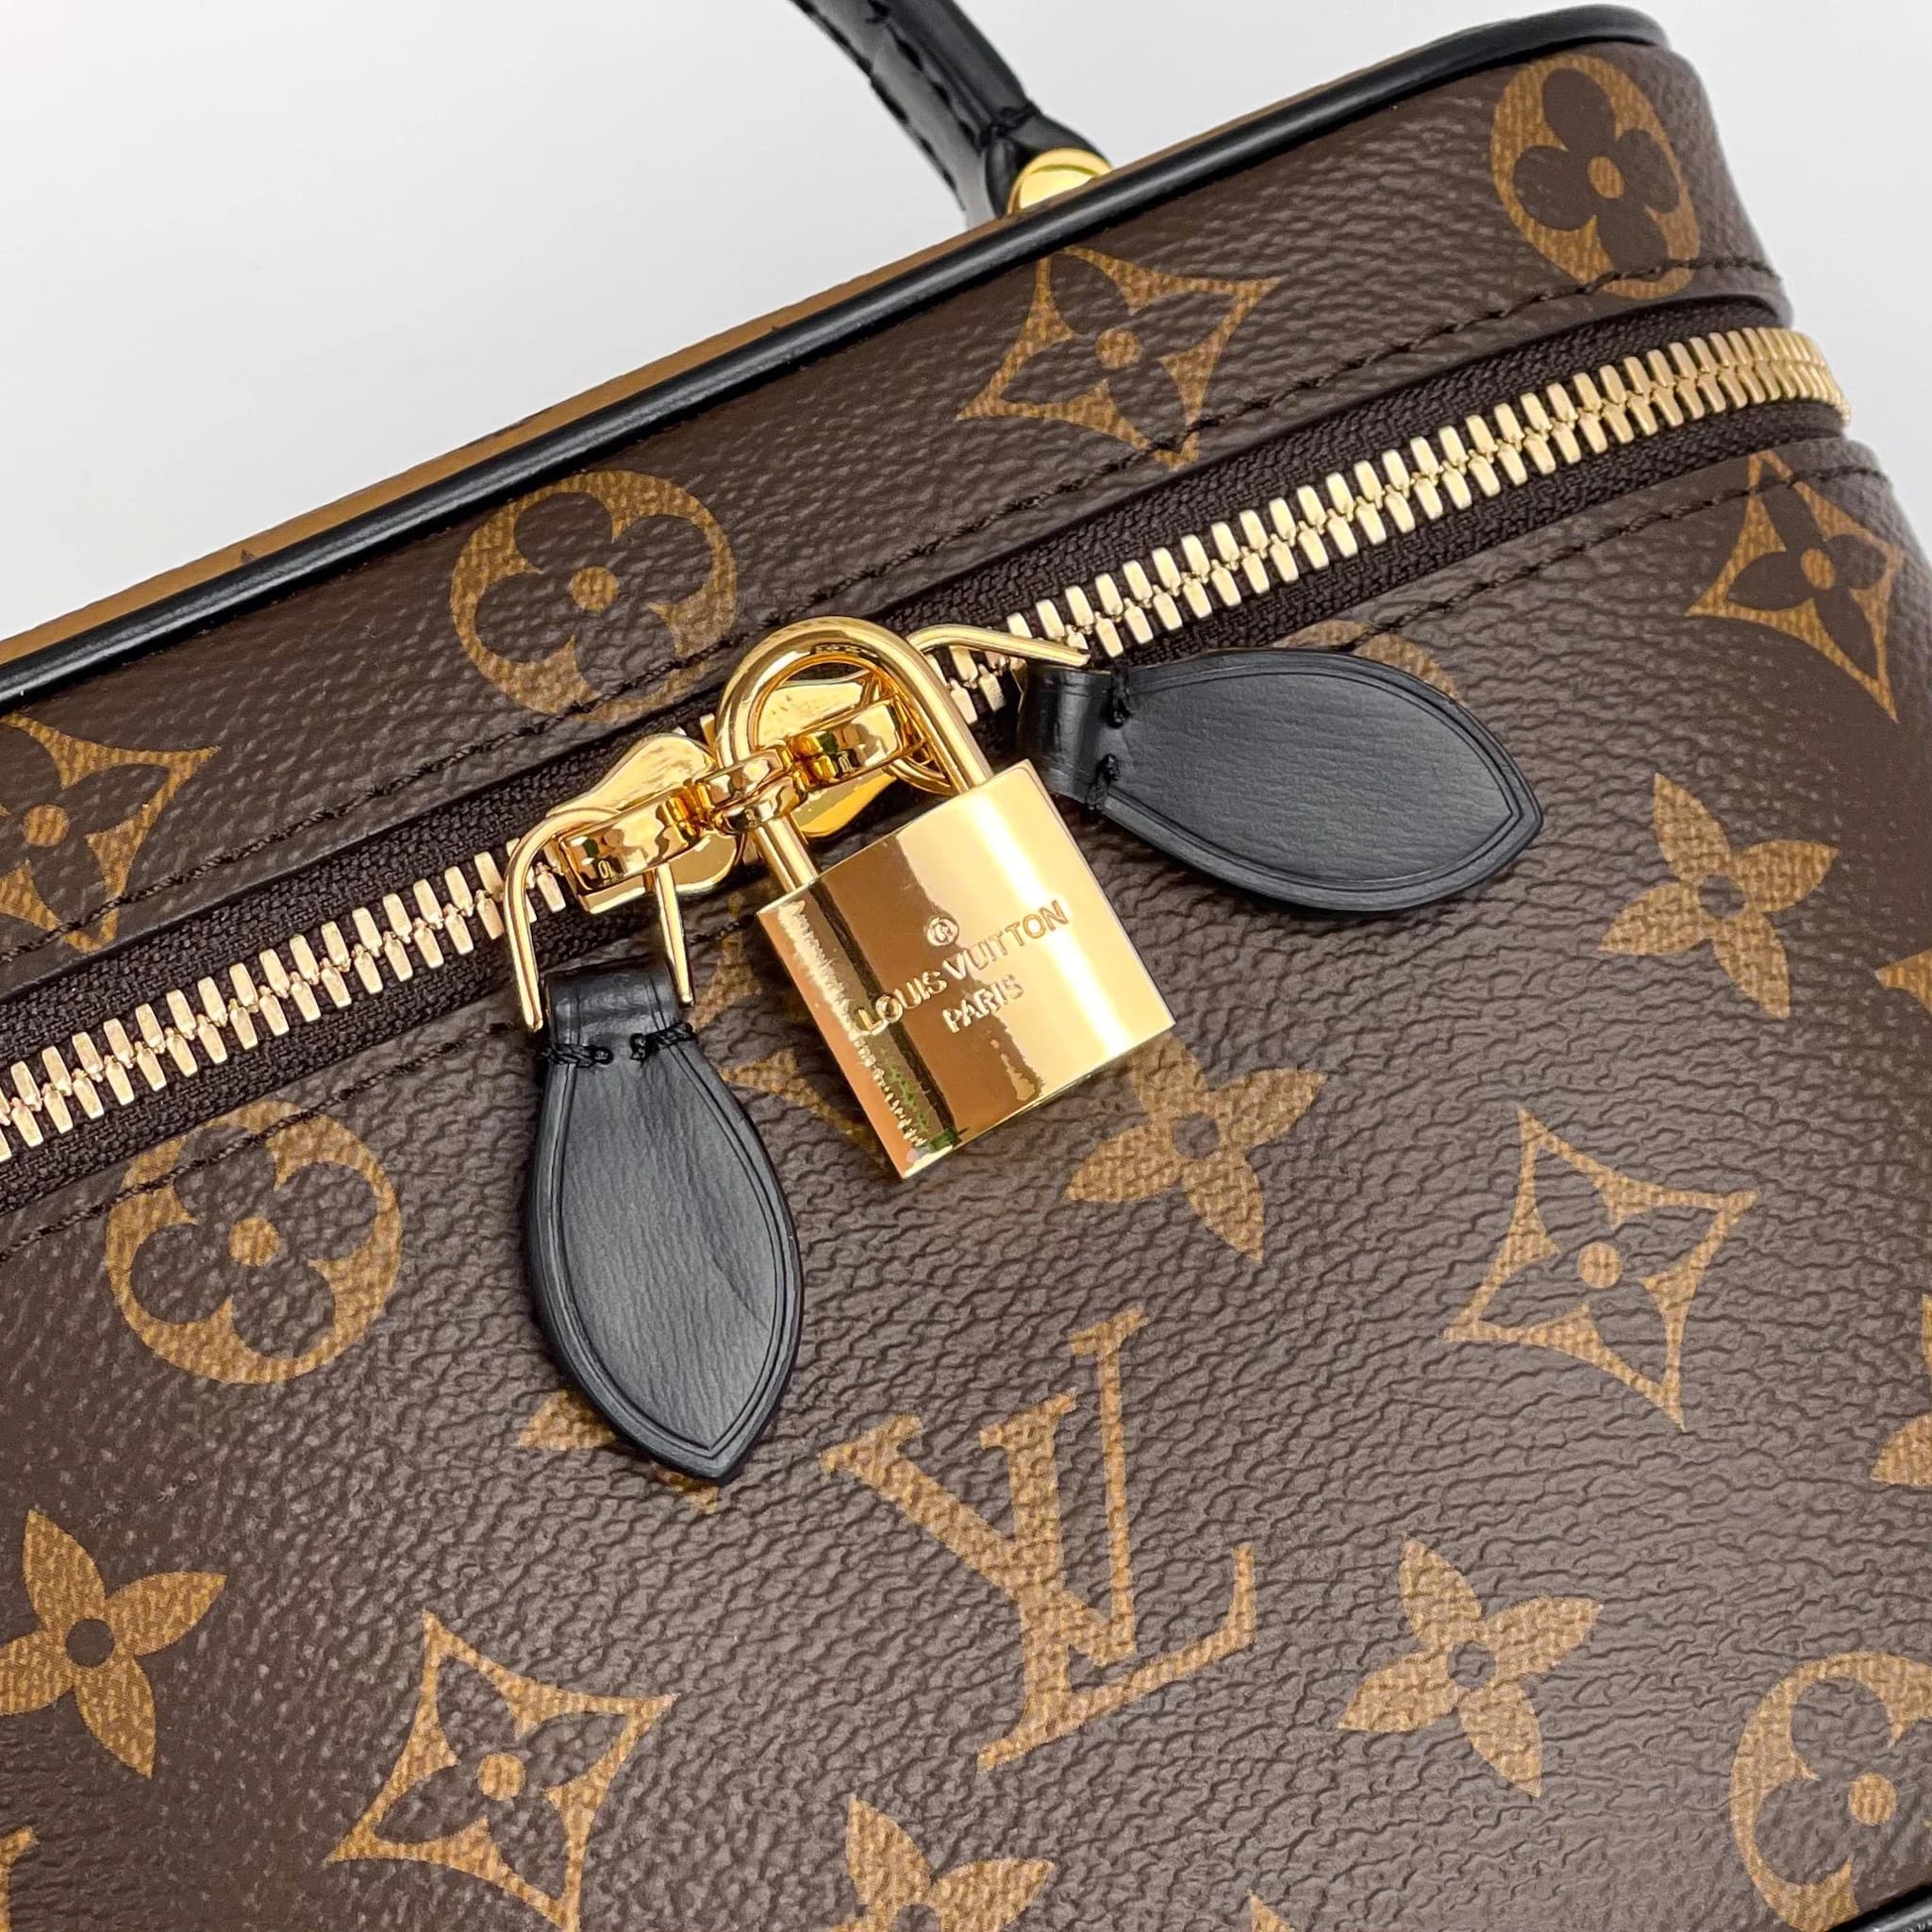 Túi đeo chéo nữ Louis Vuitton Vanity Pm Monogram